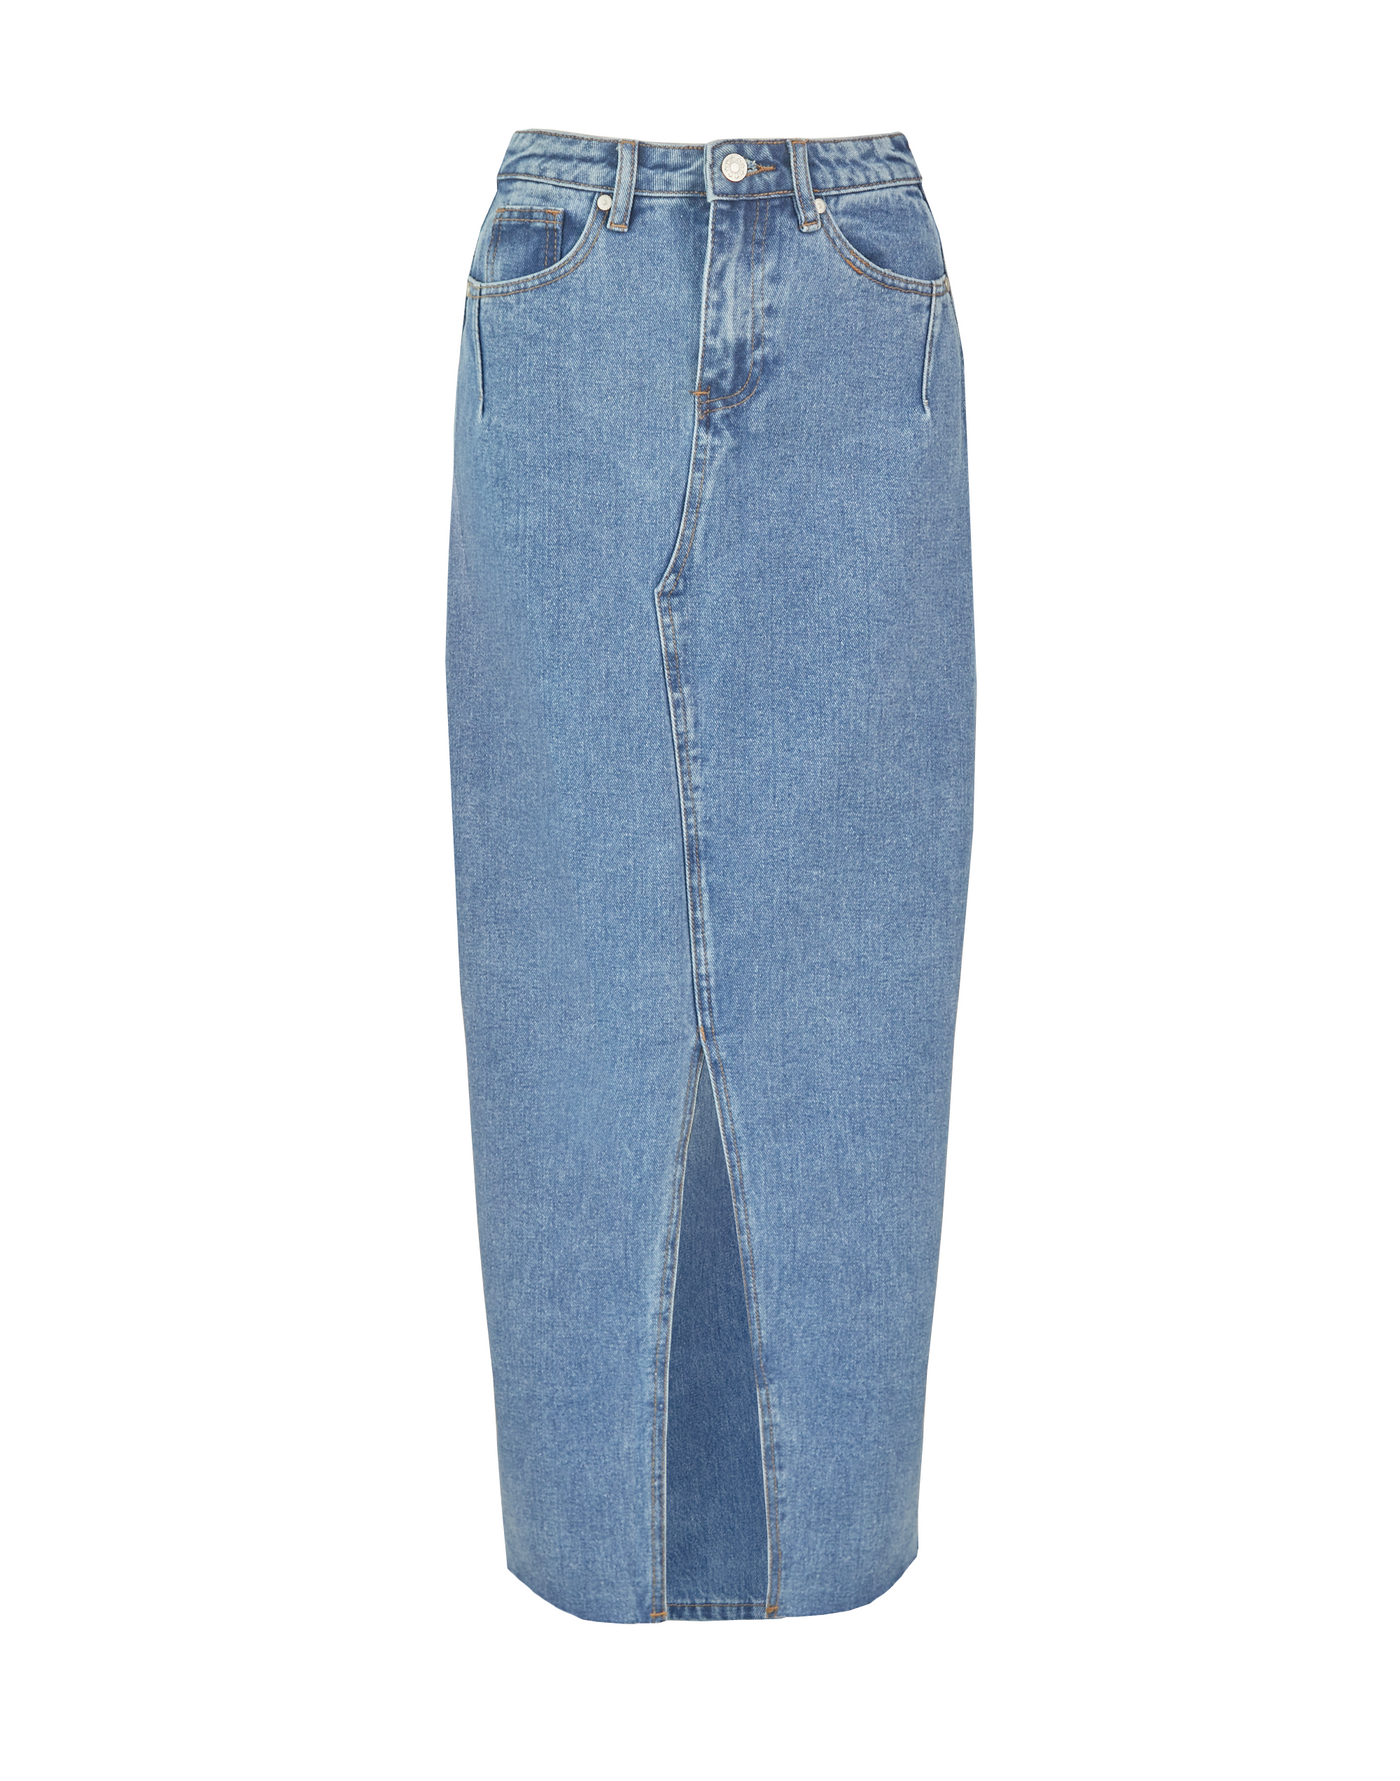 Drew Denim Midi Skirt (Mid Wash) - Mid Wash Blue Denim Midi Skirt - Women's Skirt - Charcoal Clothing